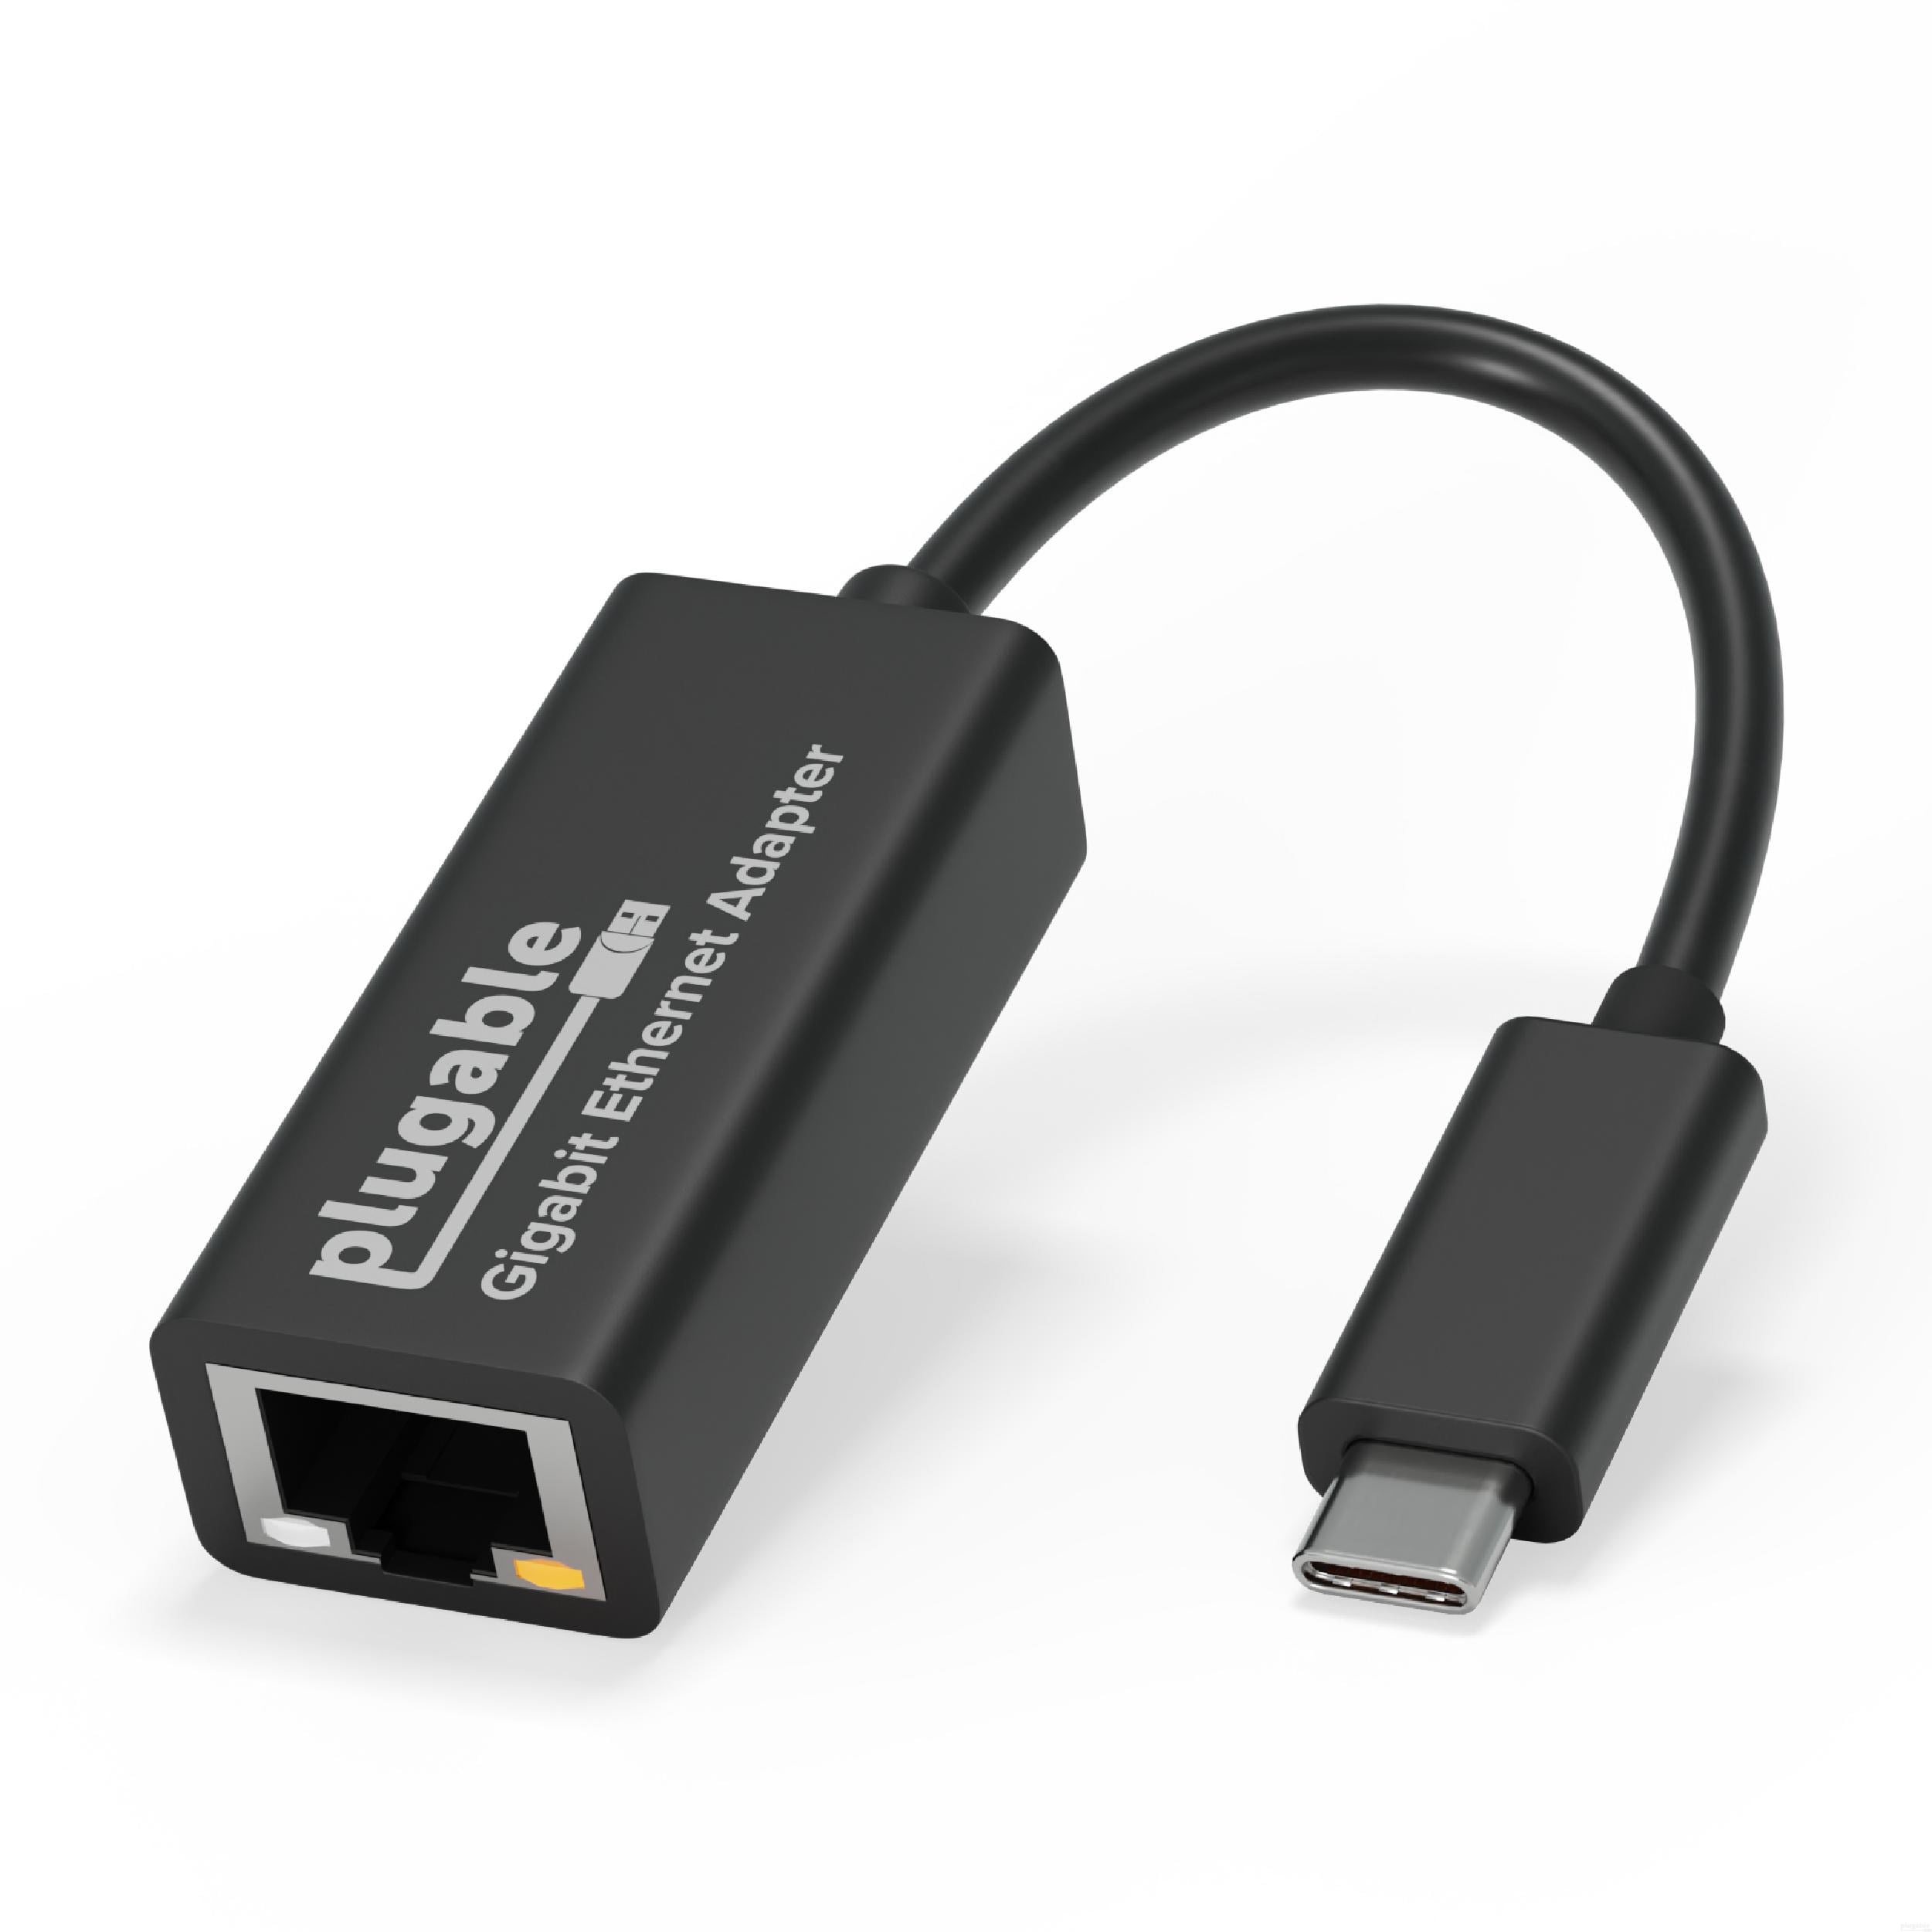 Plugable USB 2.0 10/100 Ethernet Adapter